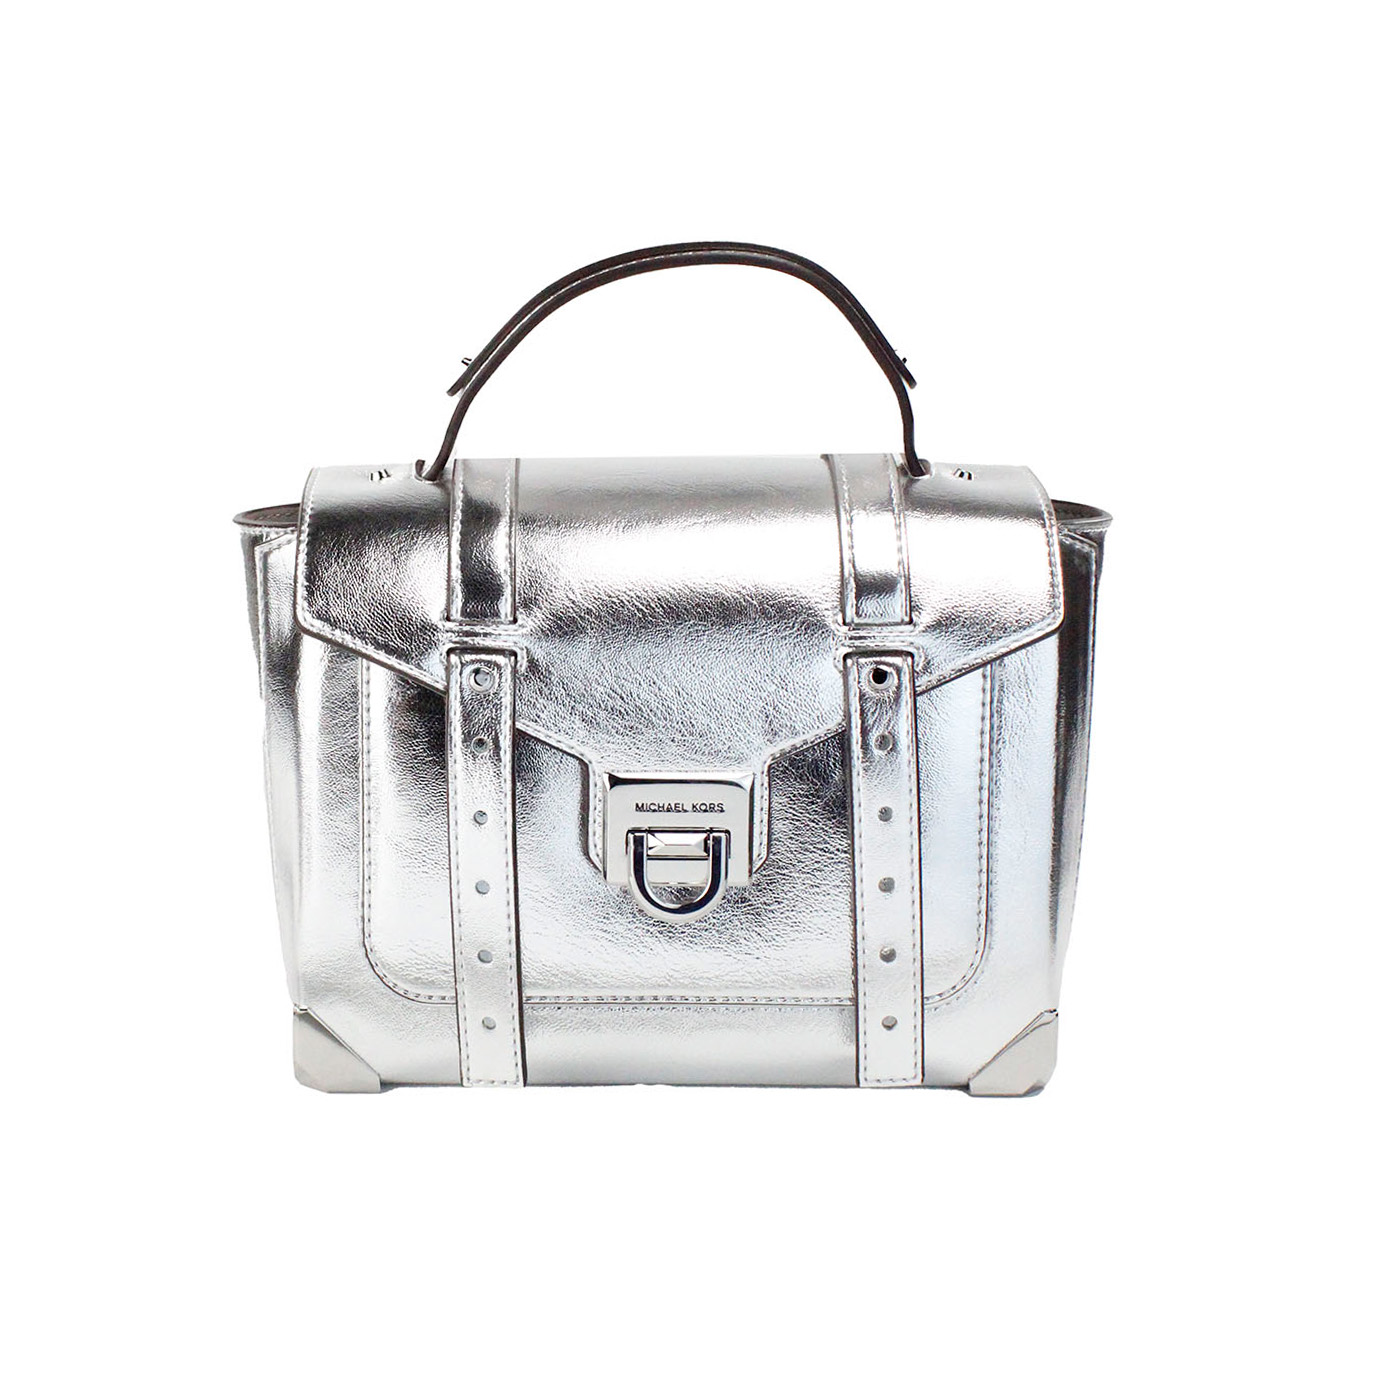 Silver Leather Top Handle Satchel Bag